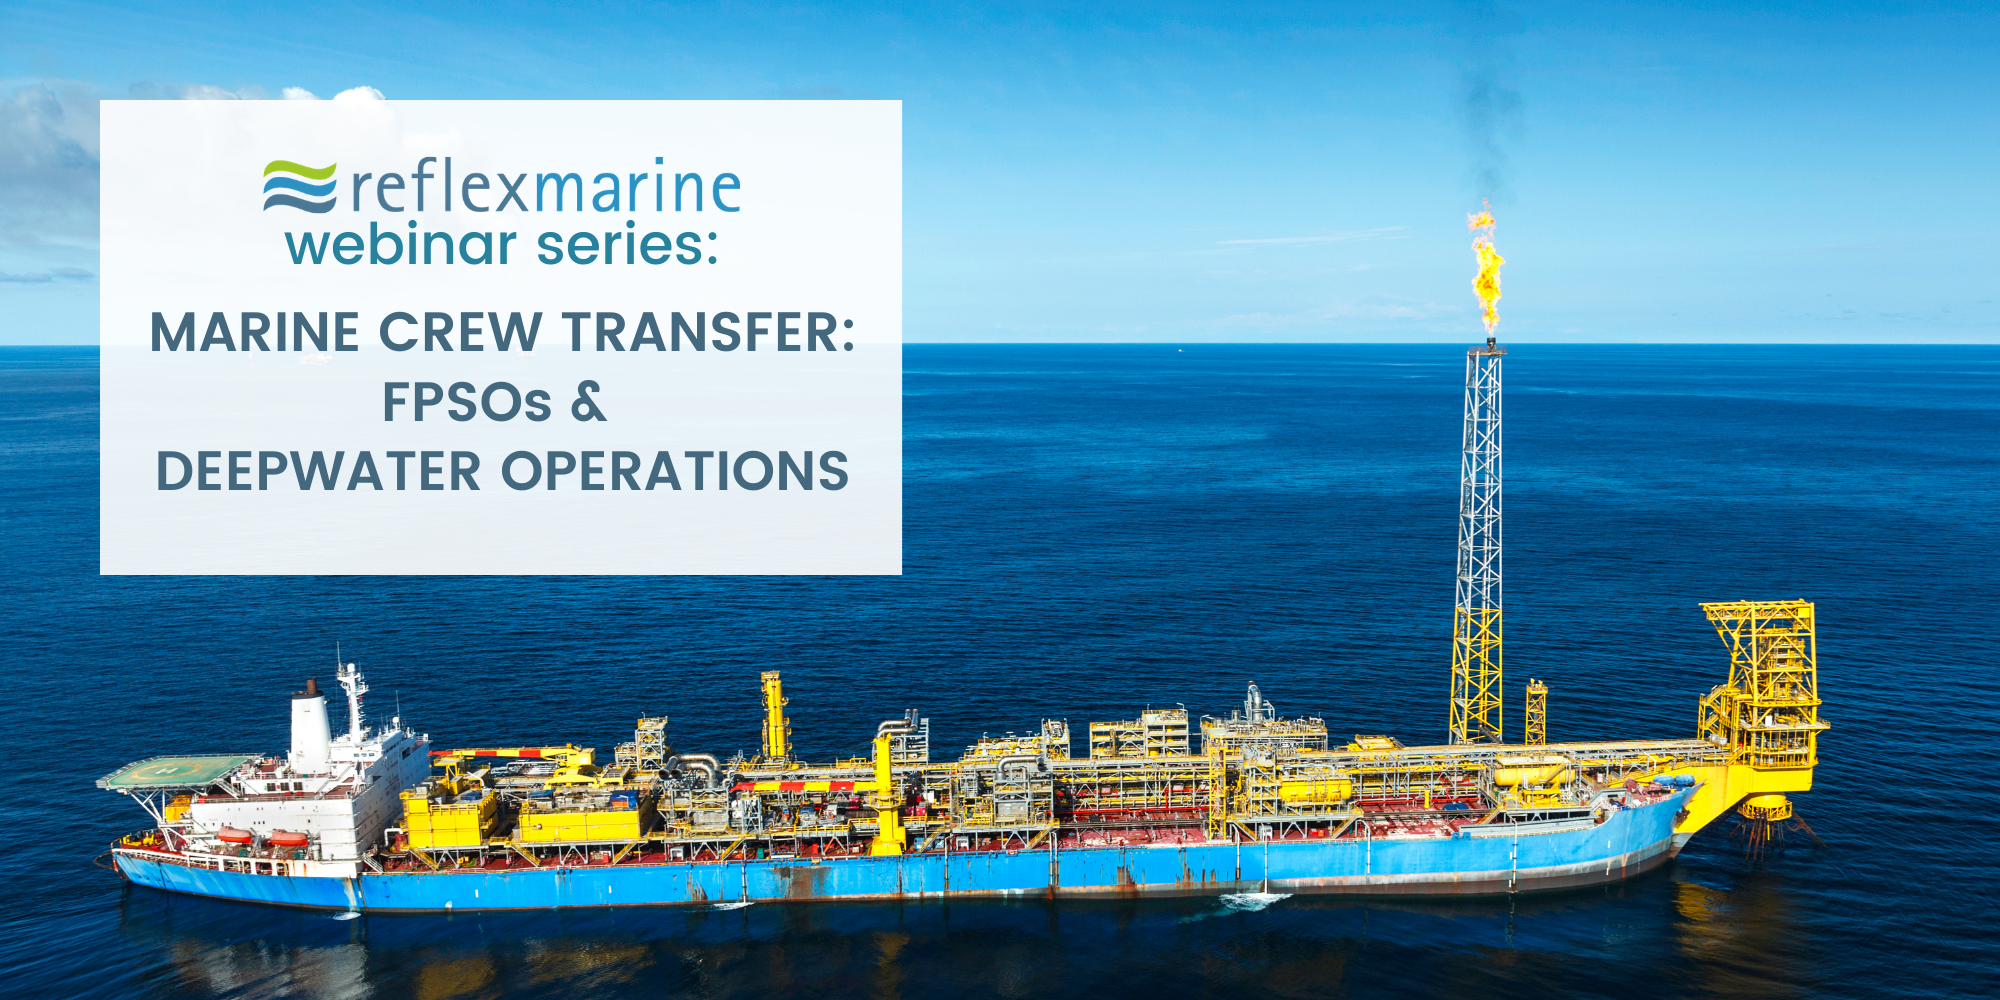 Read Reflex Marine's webinar series Industry focus: FPSOs & deepwater operations (recording)